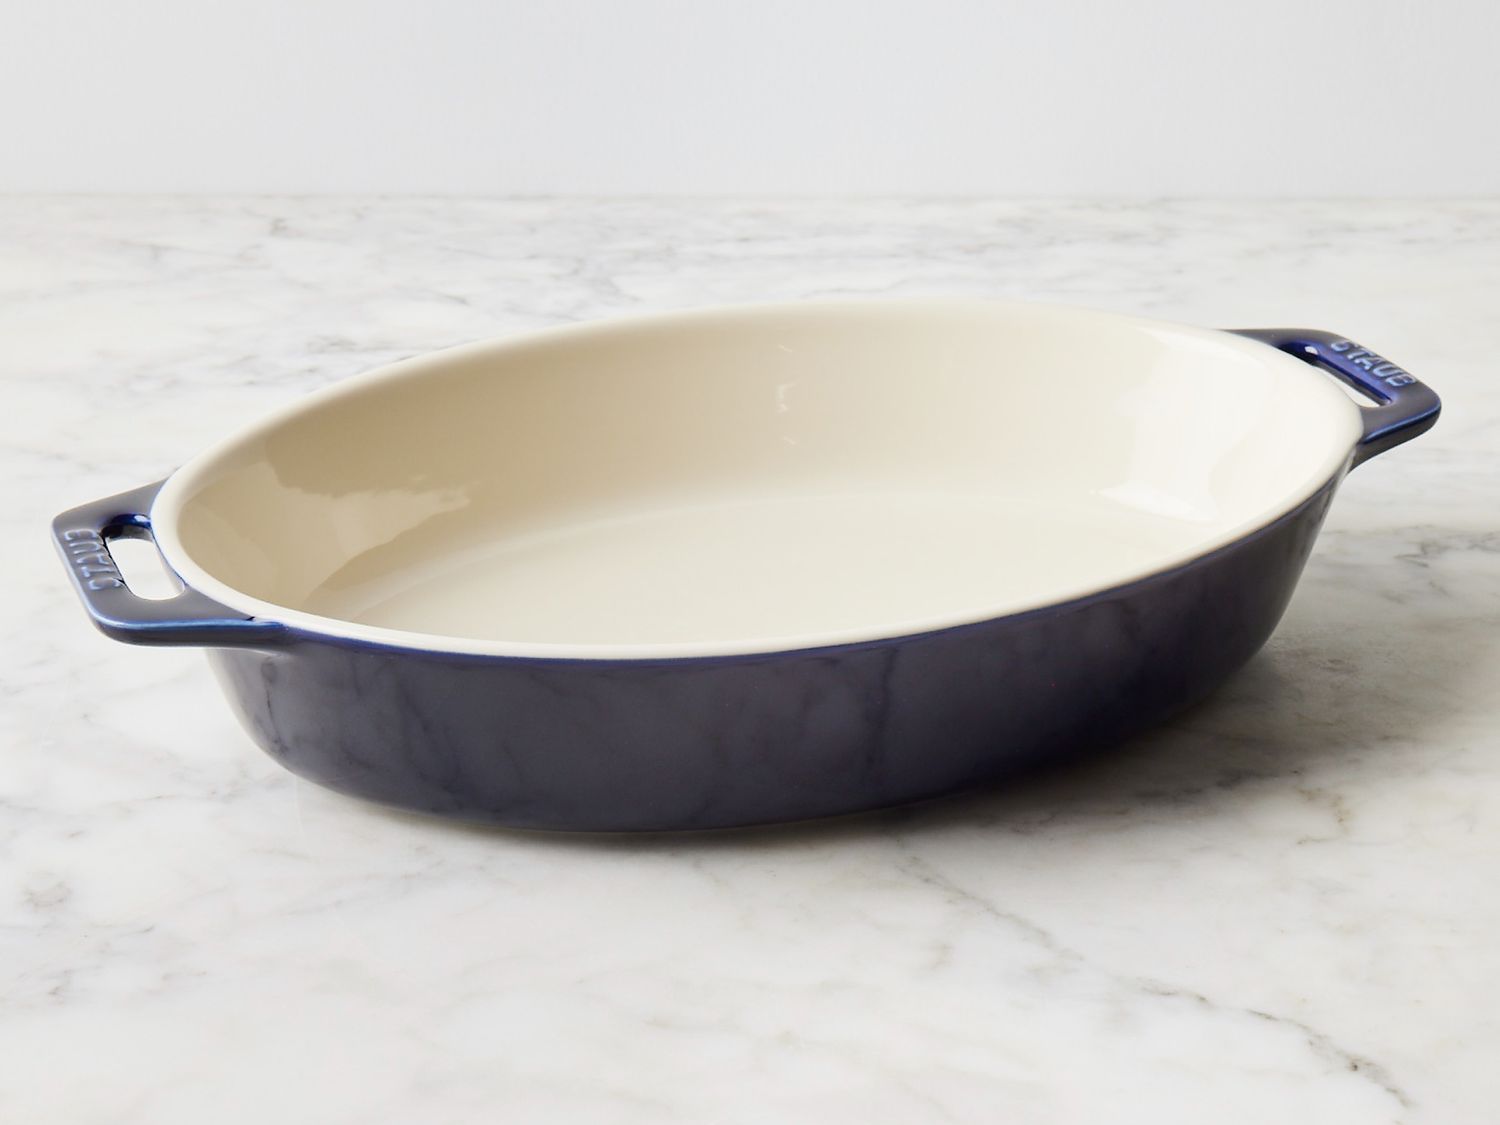 11 Oval Baking Dish (White), Staub